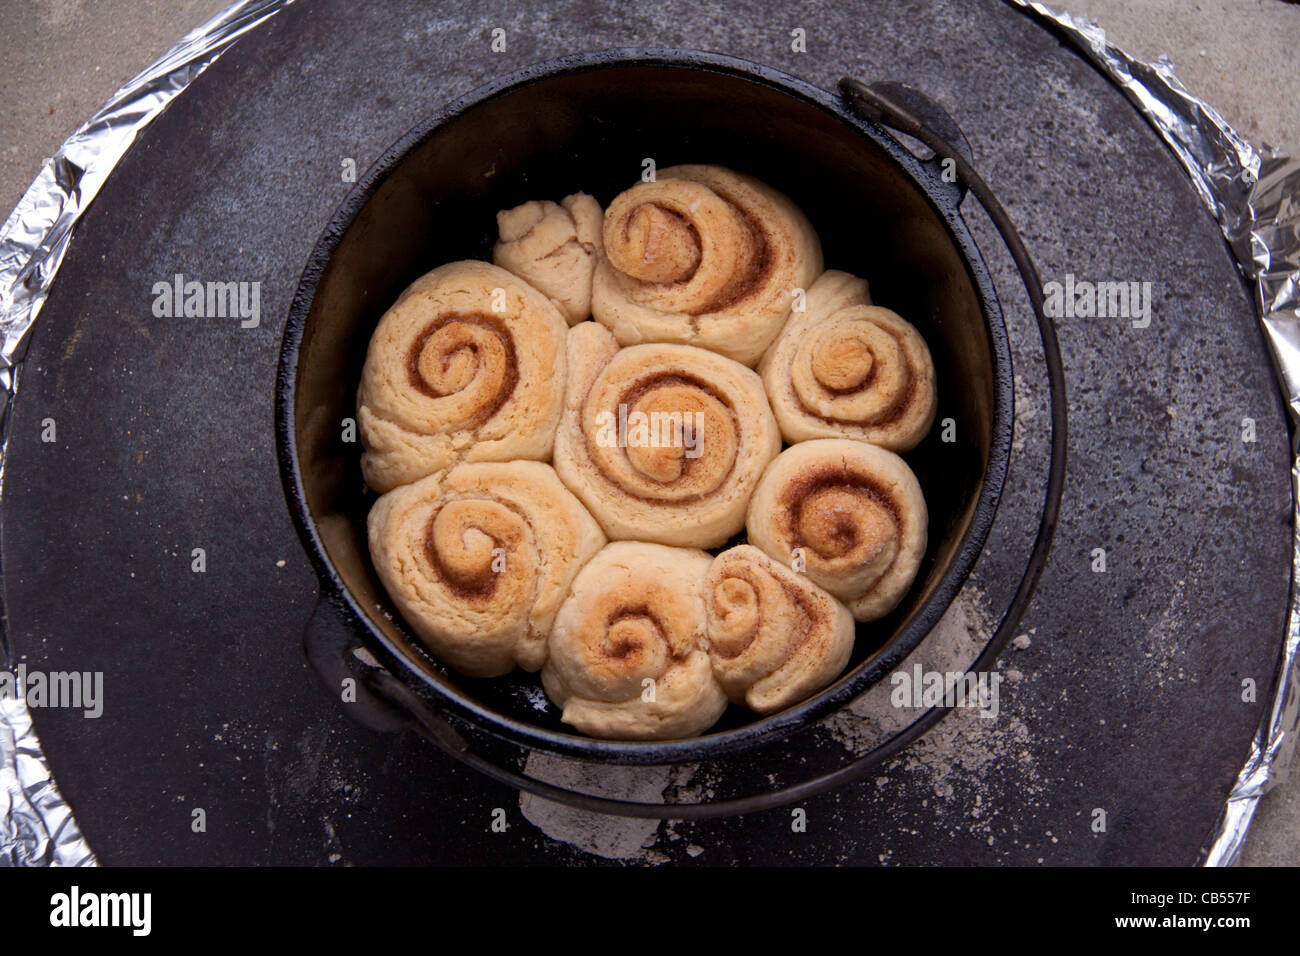 Cinnamon rolls cooked in cast iron 'black iron' Dutch Oven pot using hot coals. Stock Photo